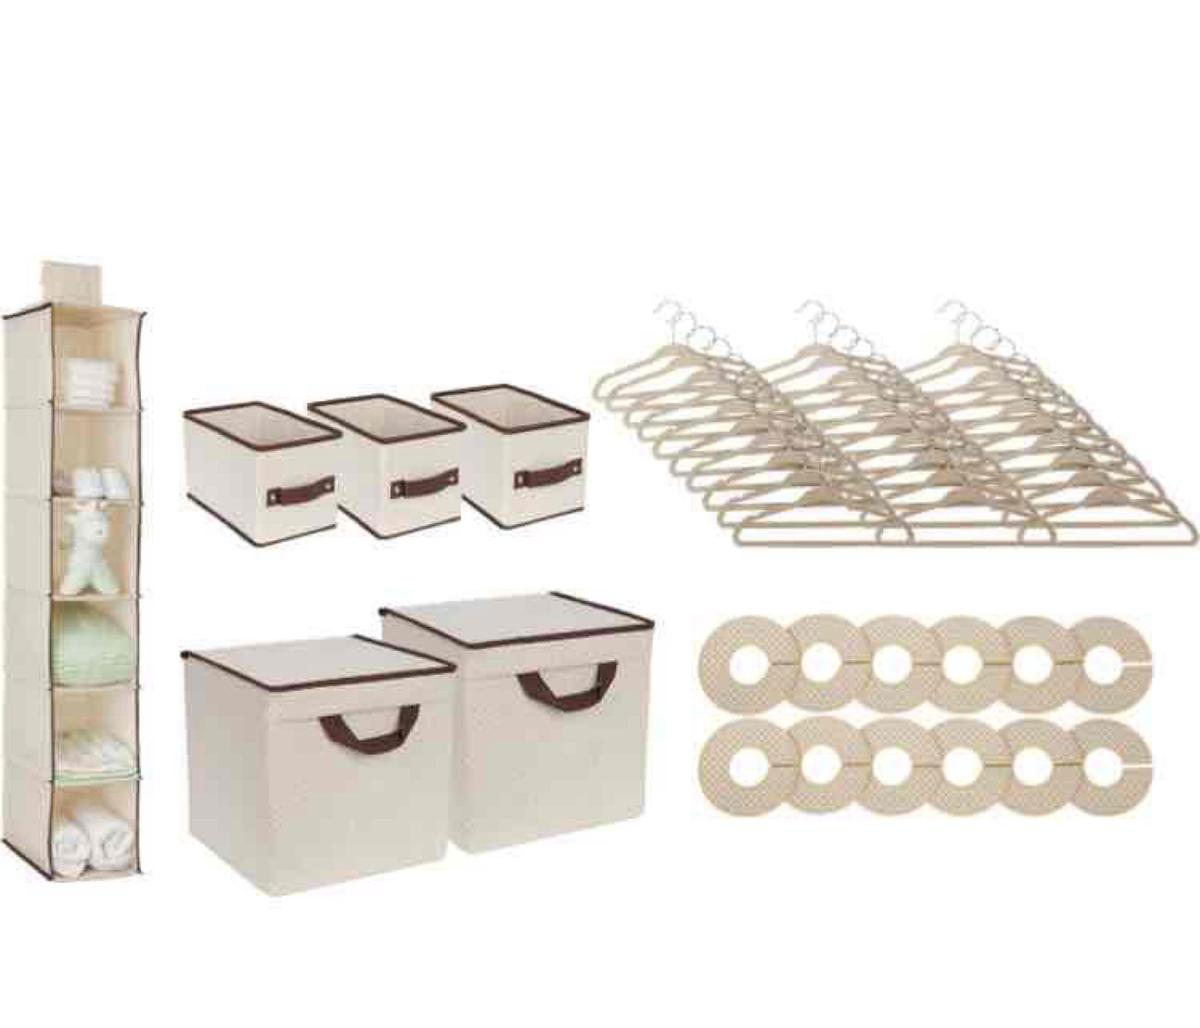 Nursery Storage 48 Piece Set - Easy Storage/Organization Solution - Keeps Bedroom, Nursery & Closet